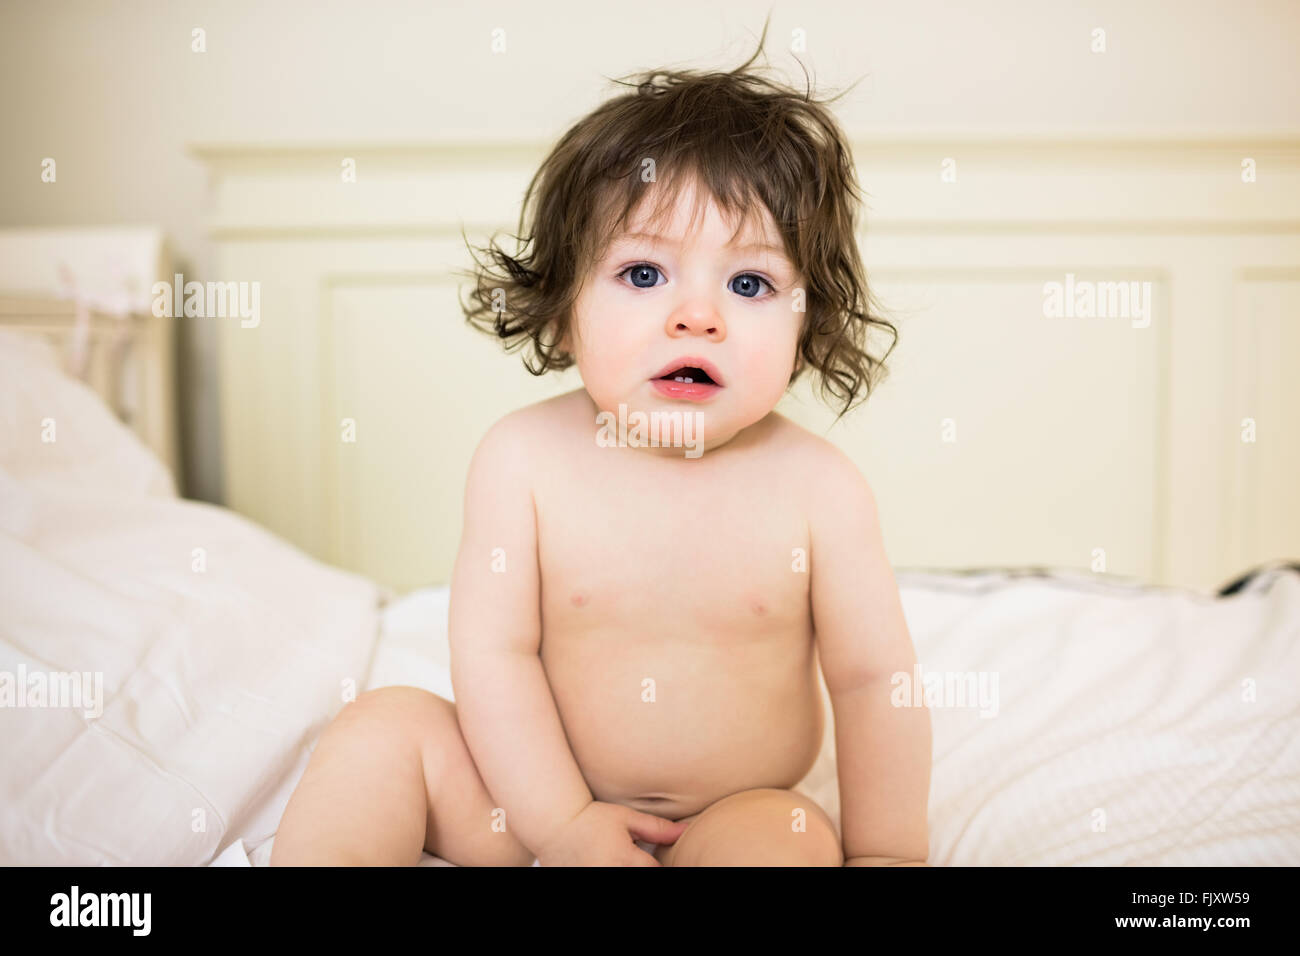 Almohada o almohada pequeña para bebé Imágenes recortadas de stock - Alamy